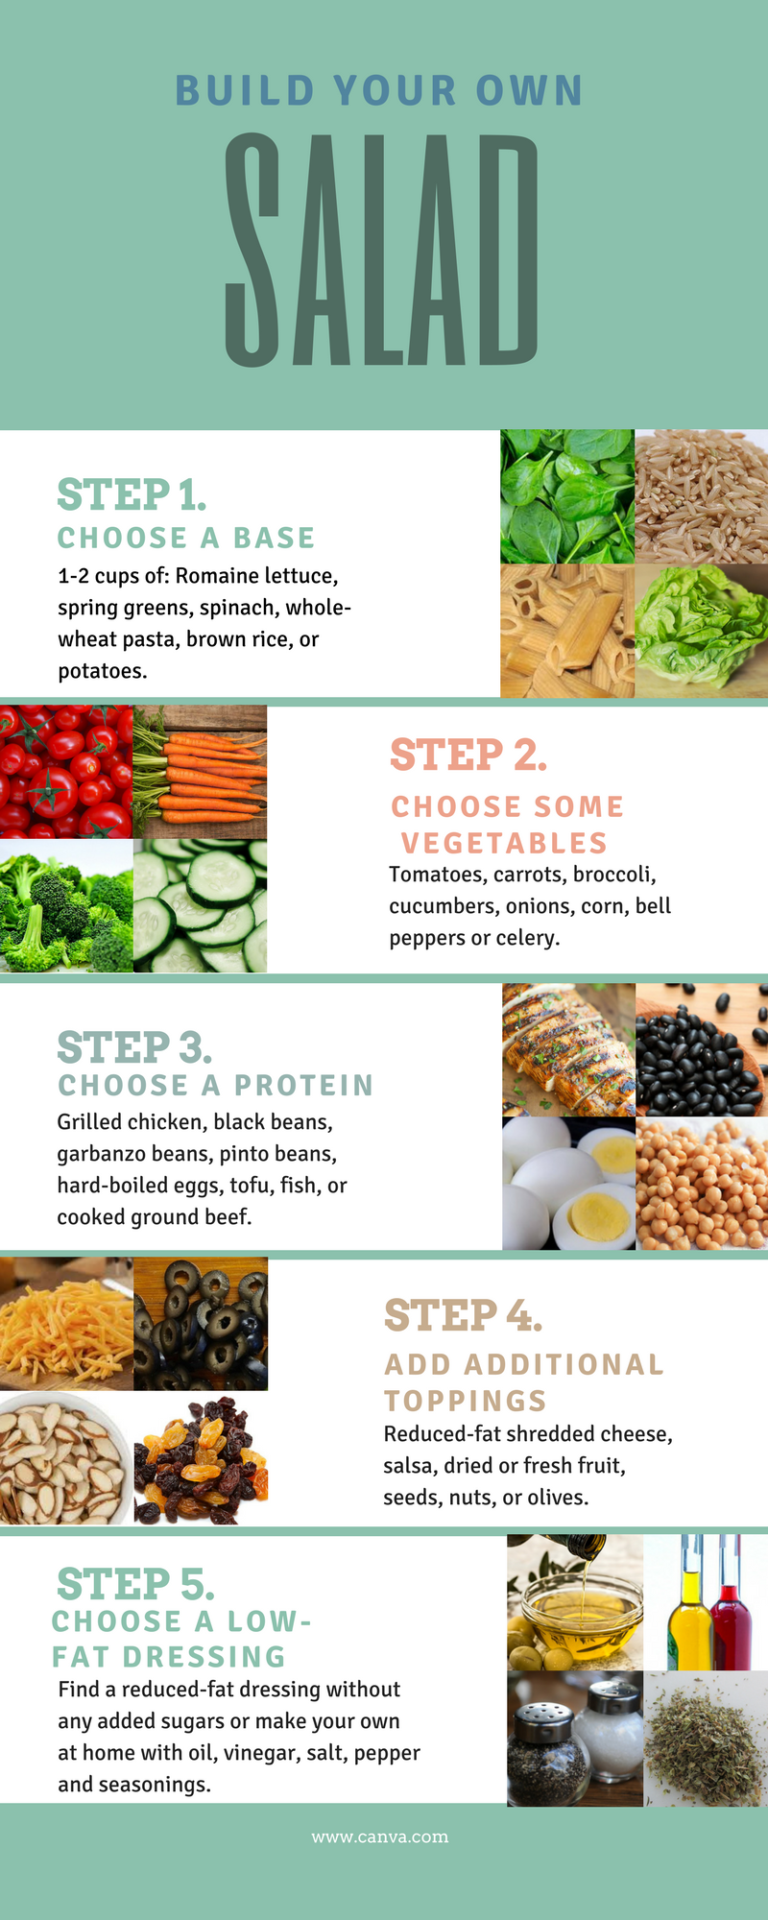 Build Your Own Salad | Virginia Family Nutrition Program